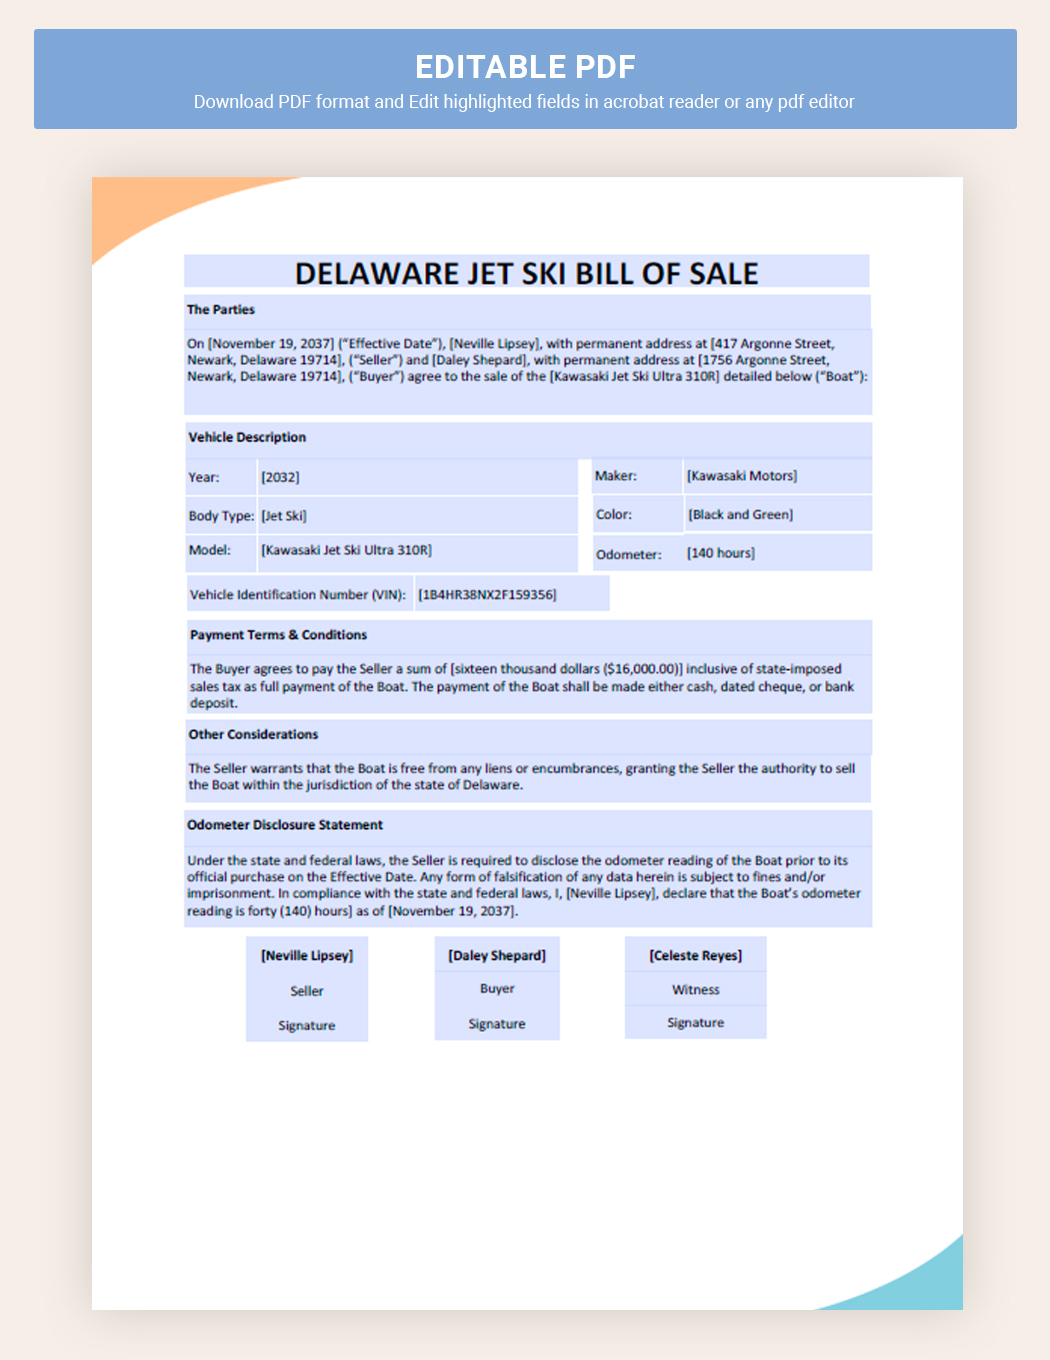 Delaware Jet Ski Bill of Sale Form Template